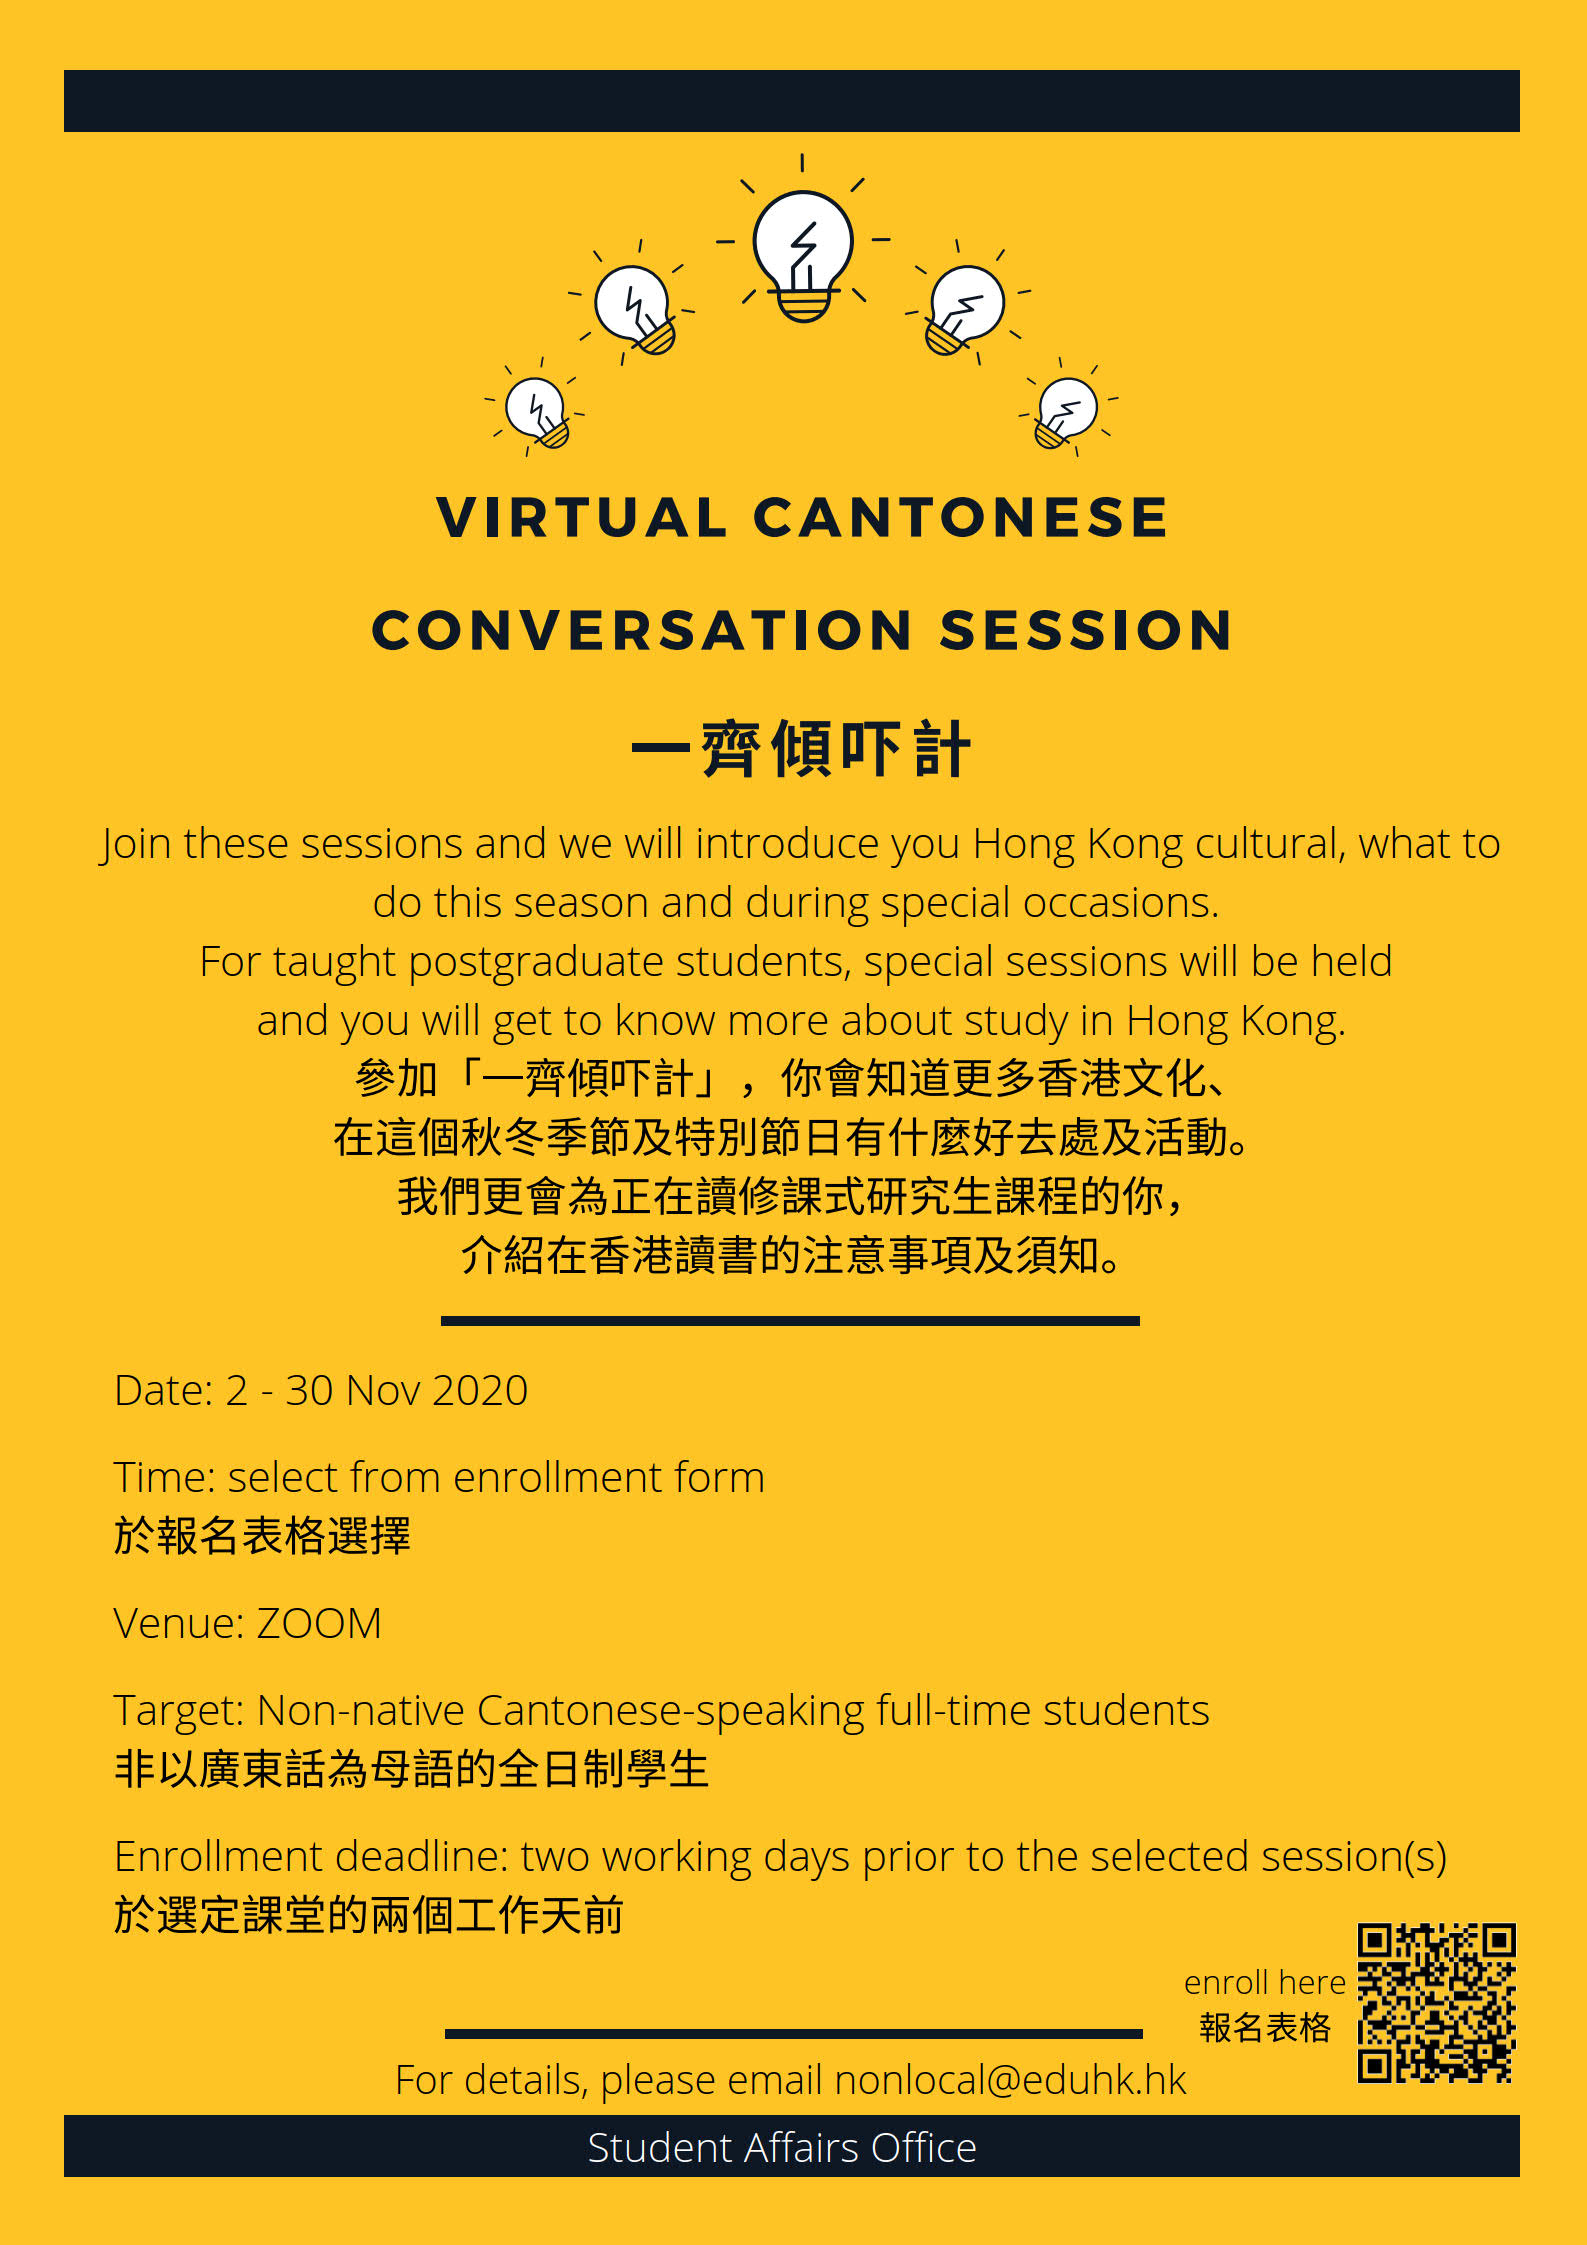 Self Photos / Files - Poster_Virtual Cantonese Conversation Session_Nov_1